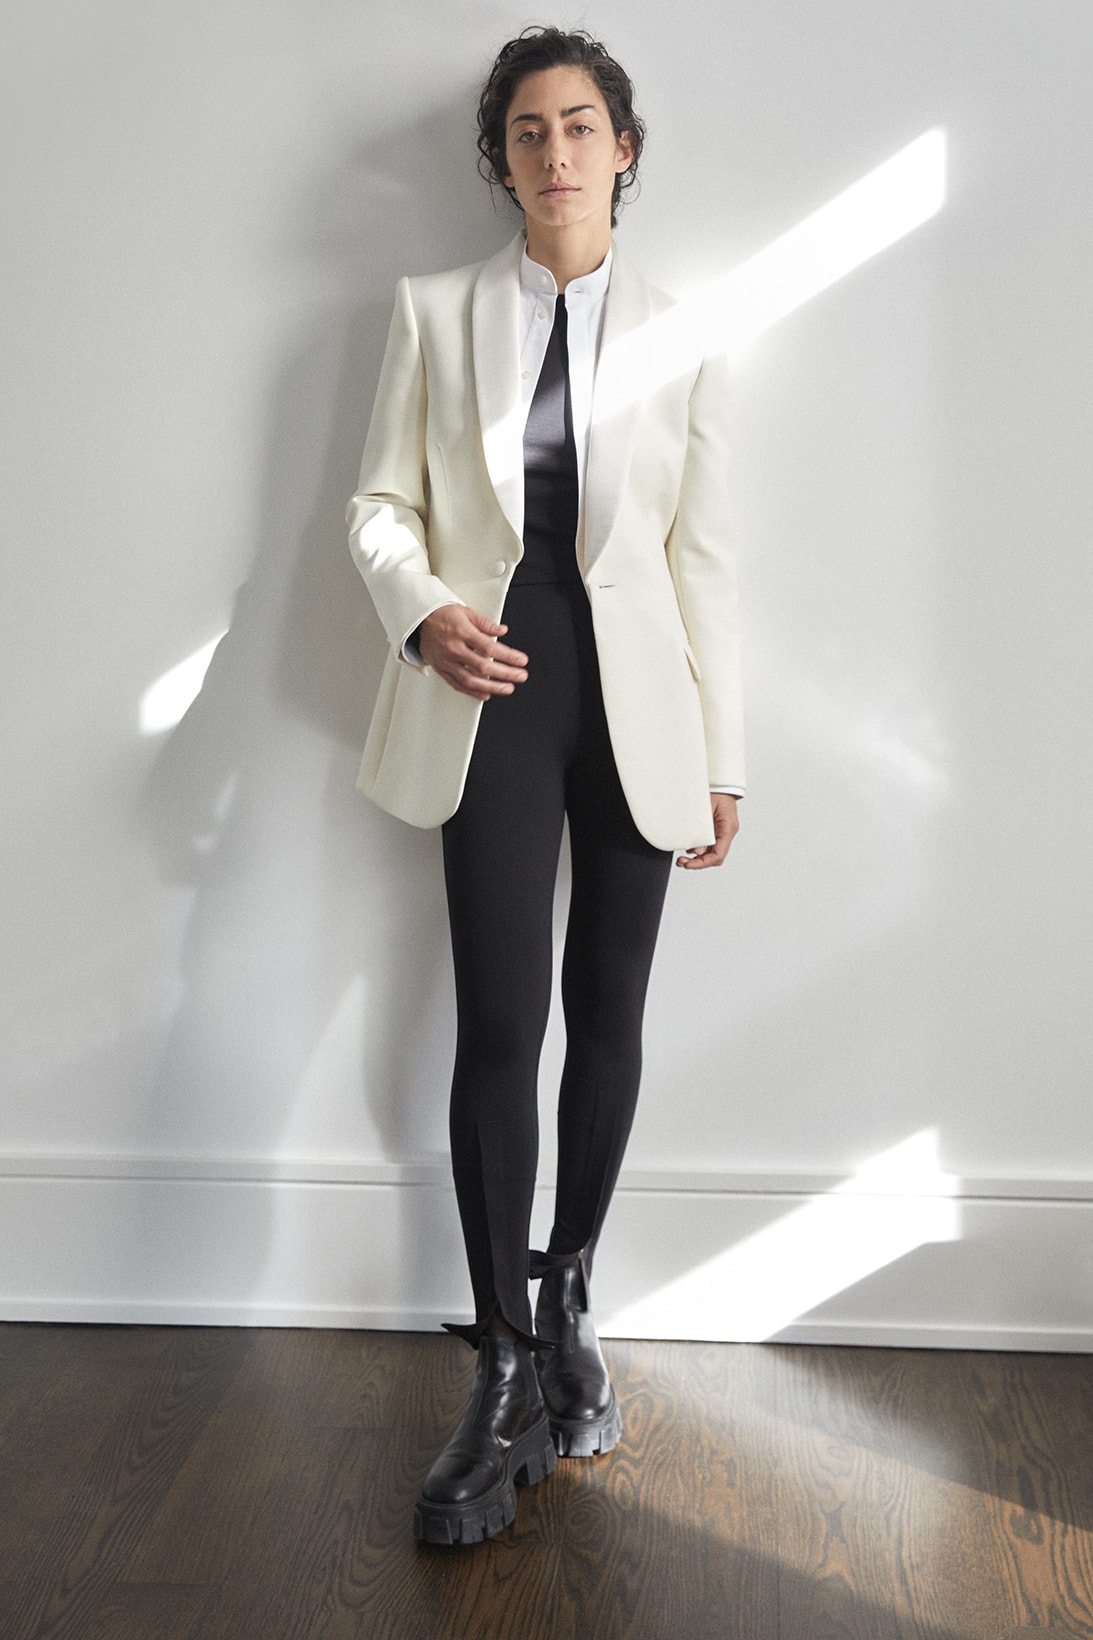 wardrobe nyc release 05 tuxedo sets women blazers coats pants campaign black white